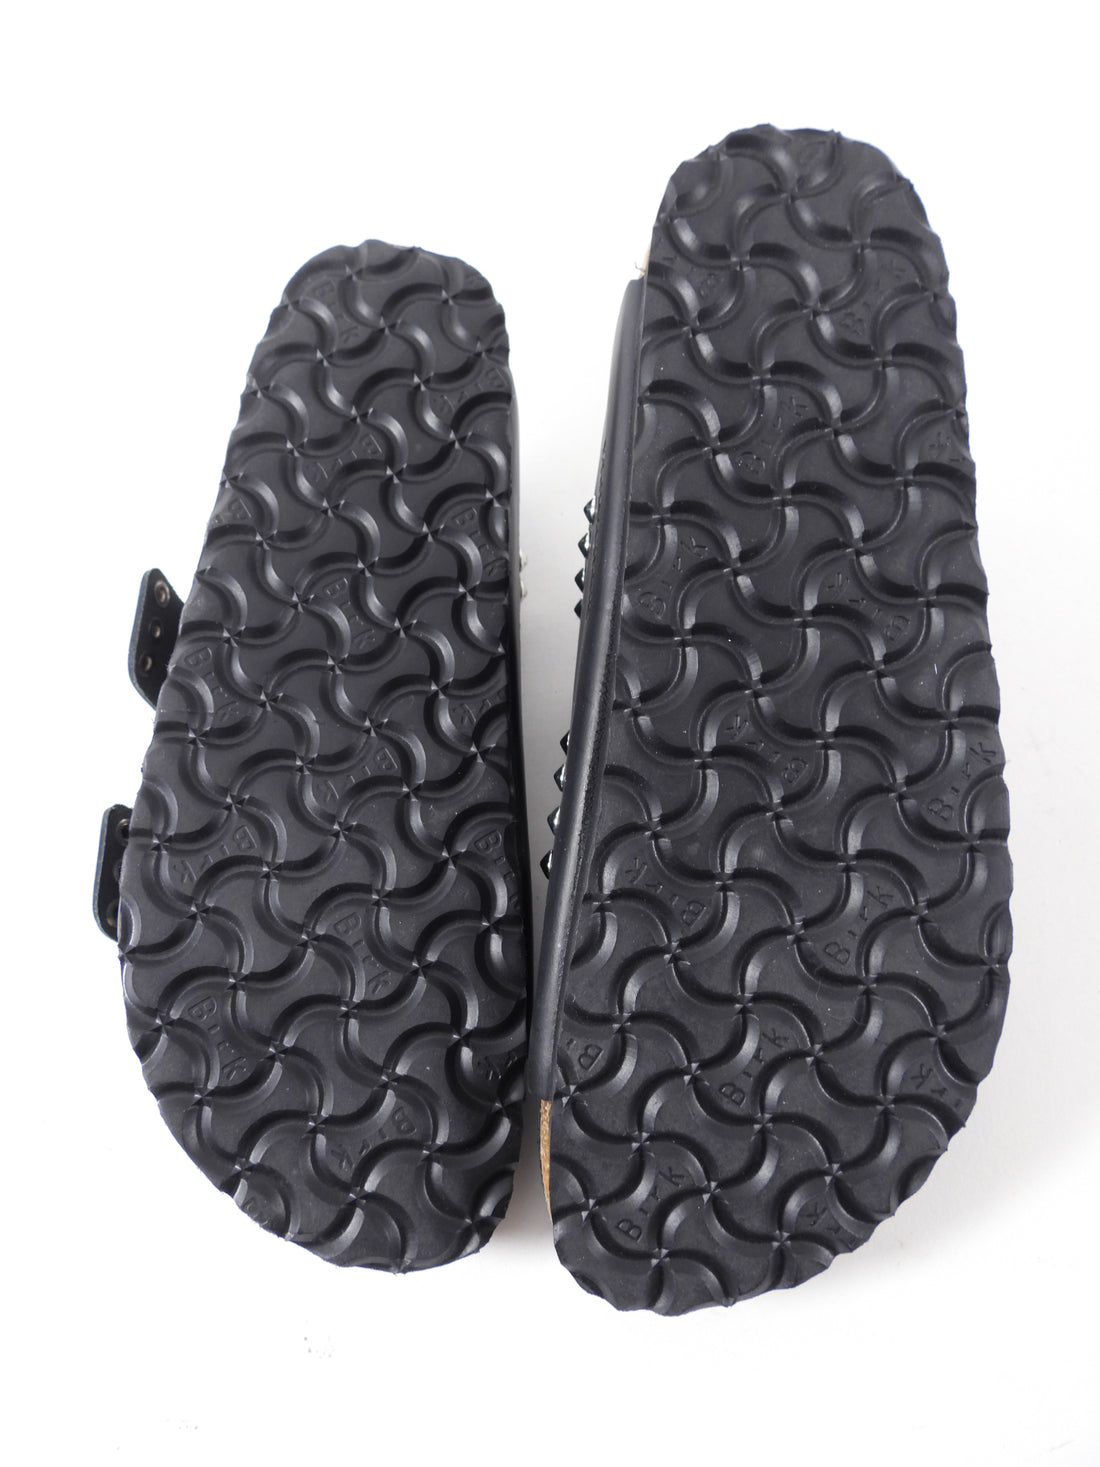 Birkinstock Black Leather and Silver Stud Sandals - 37